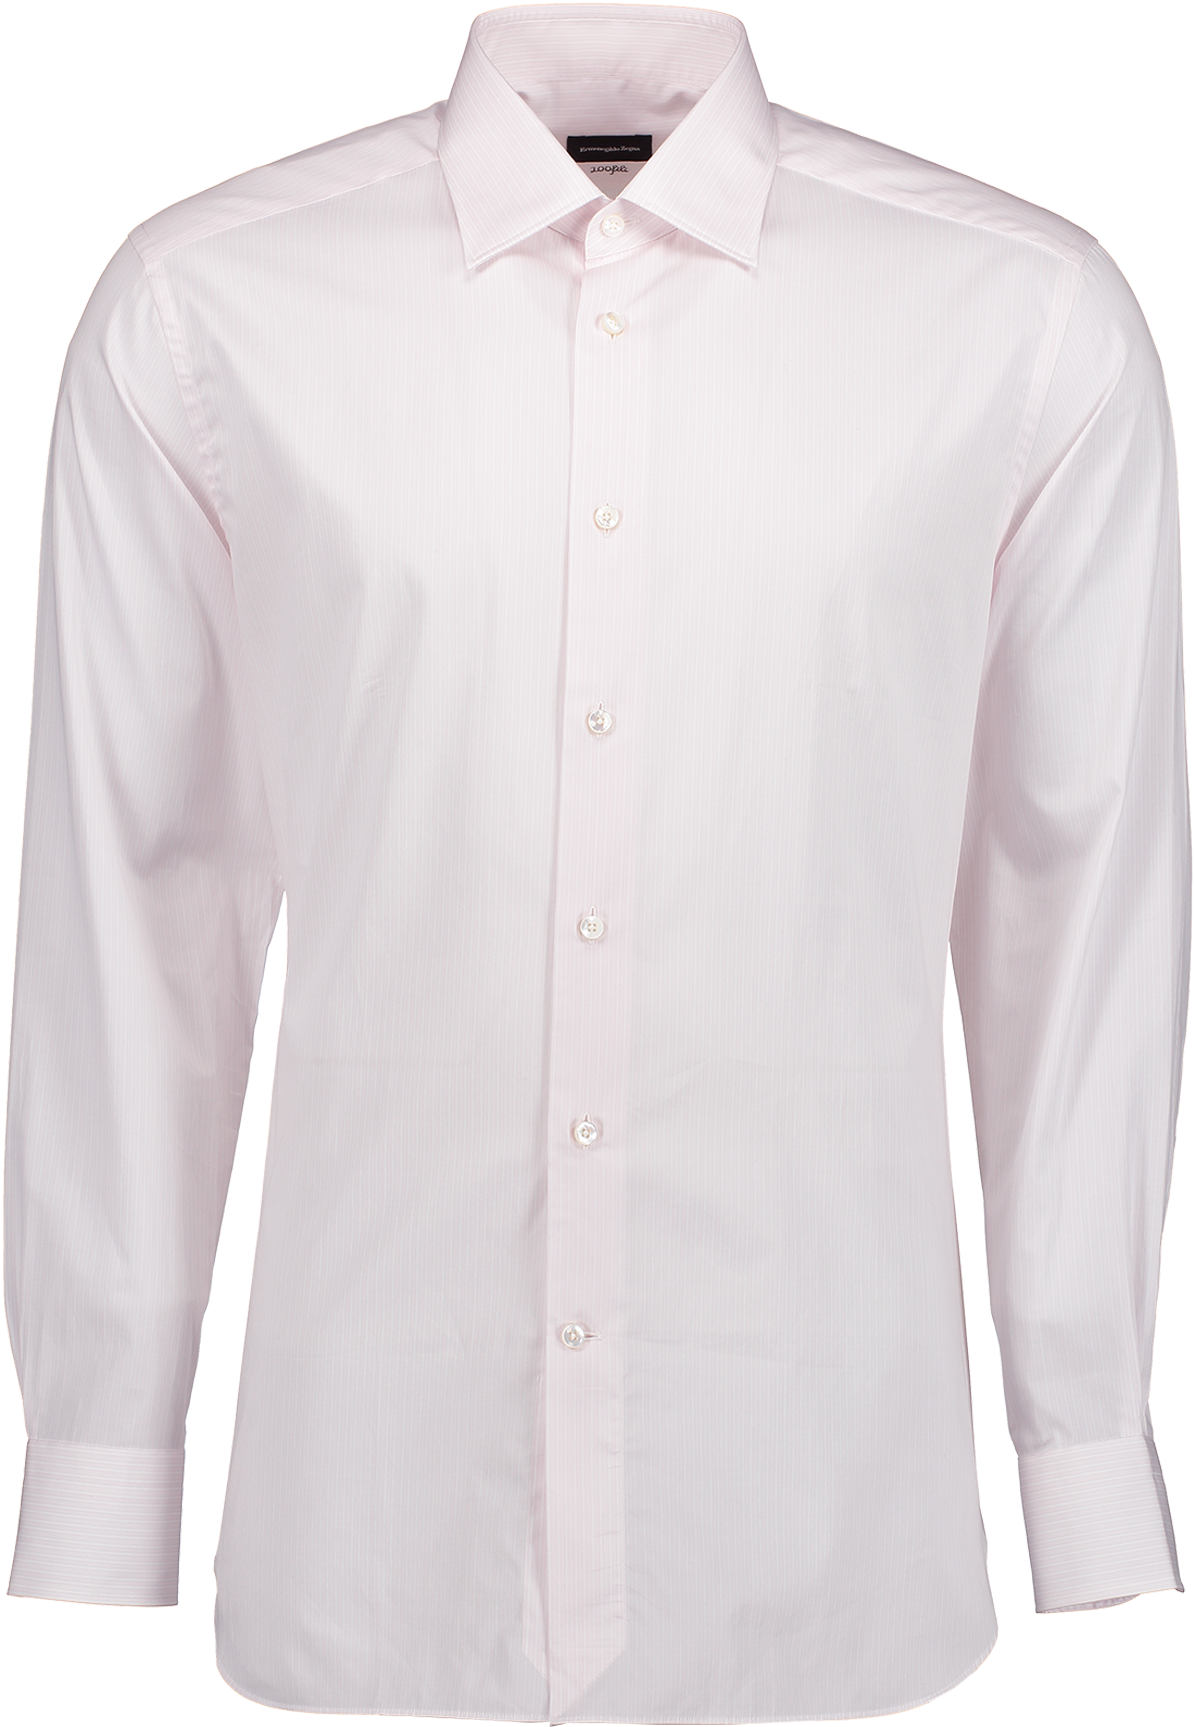 Classic White Dress Shirt PNG